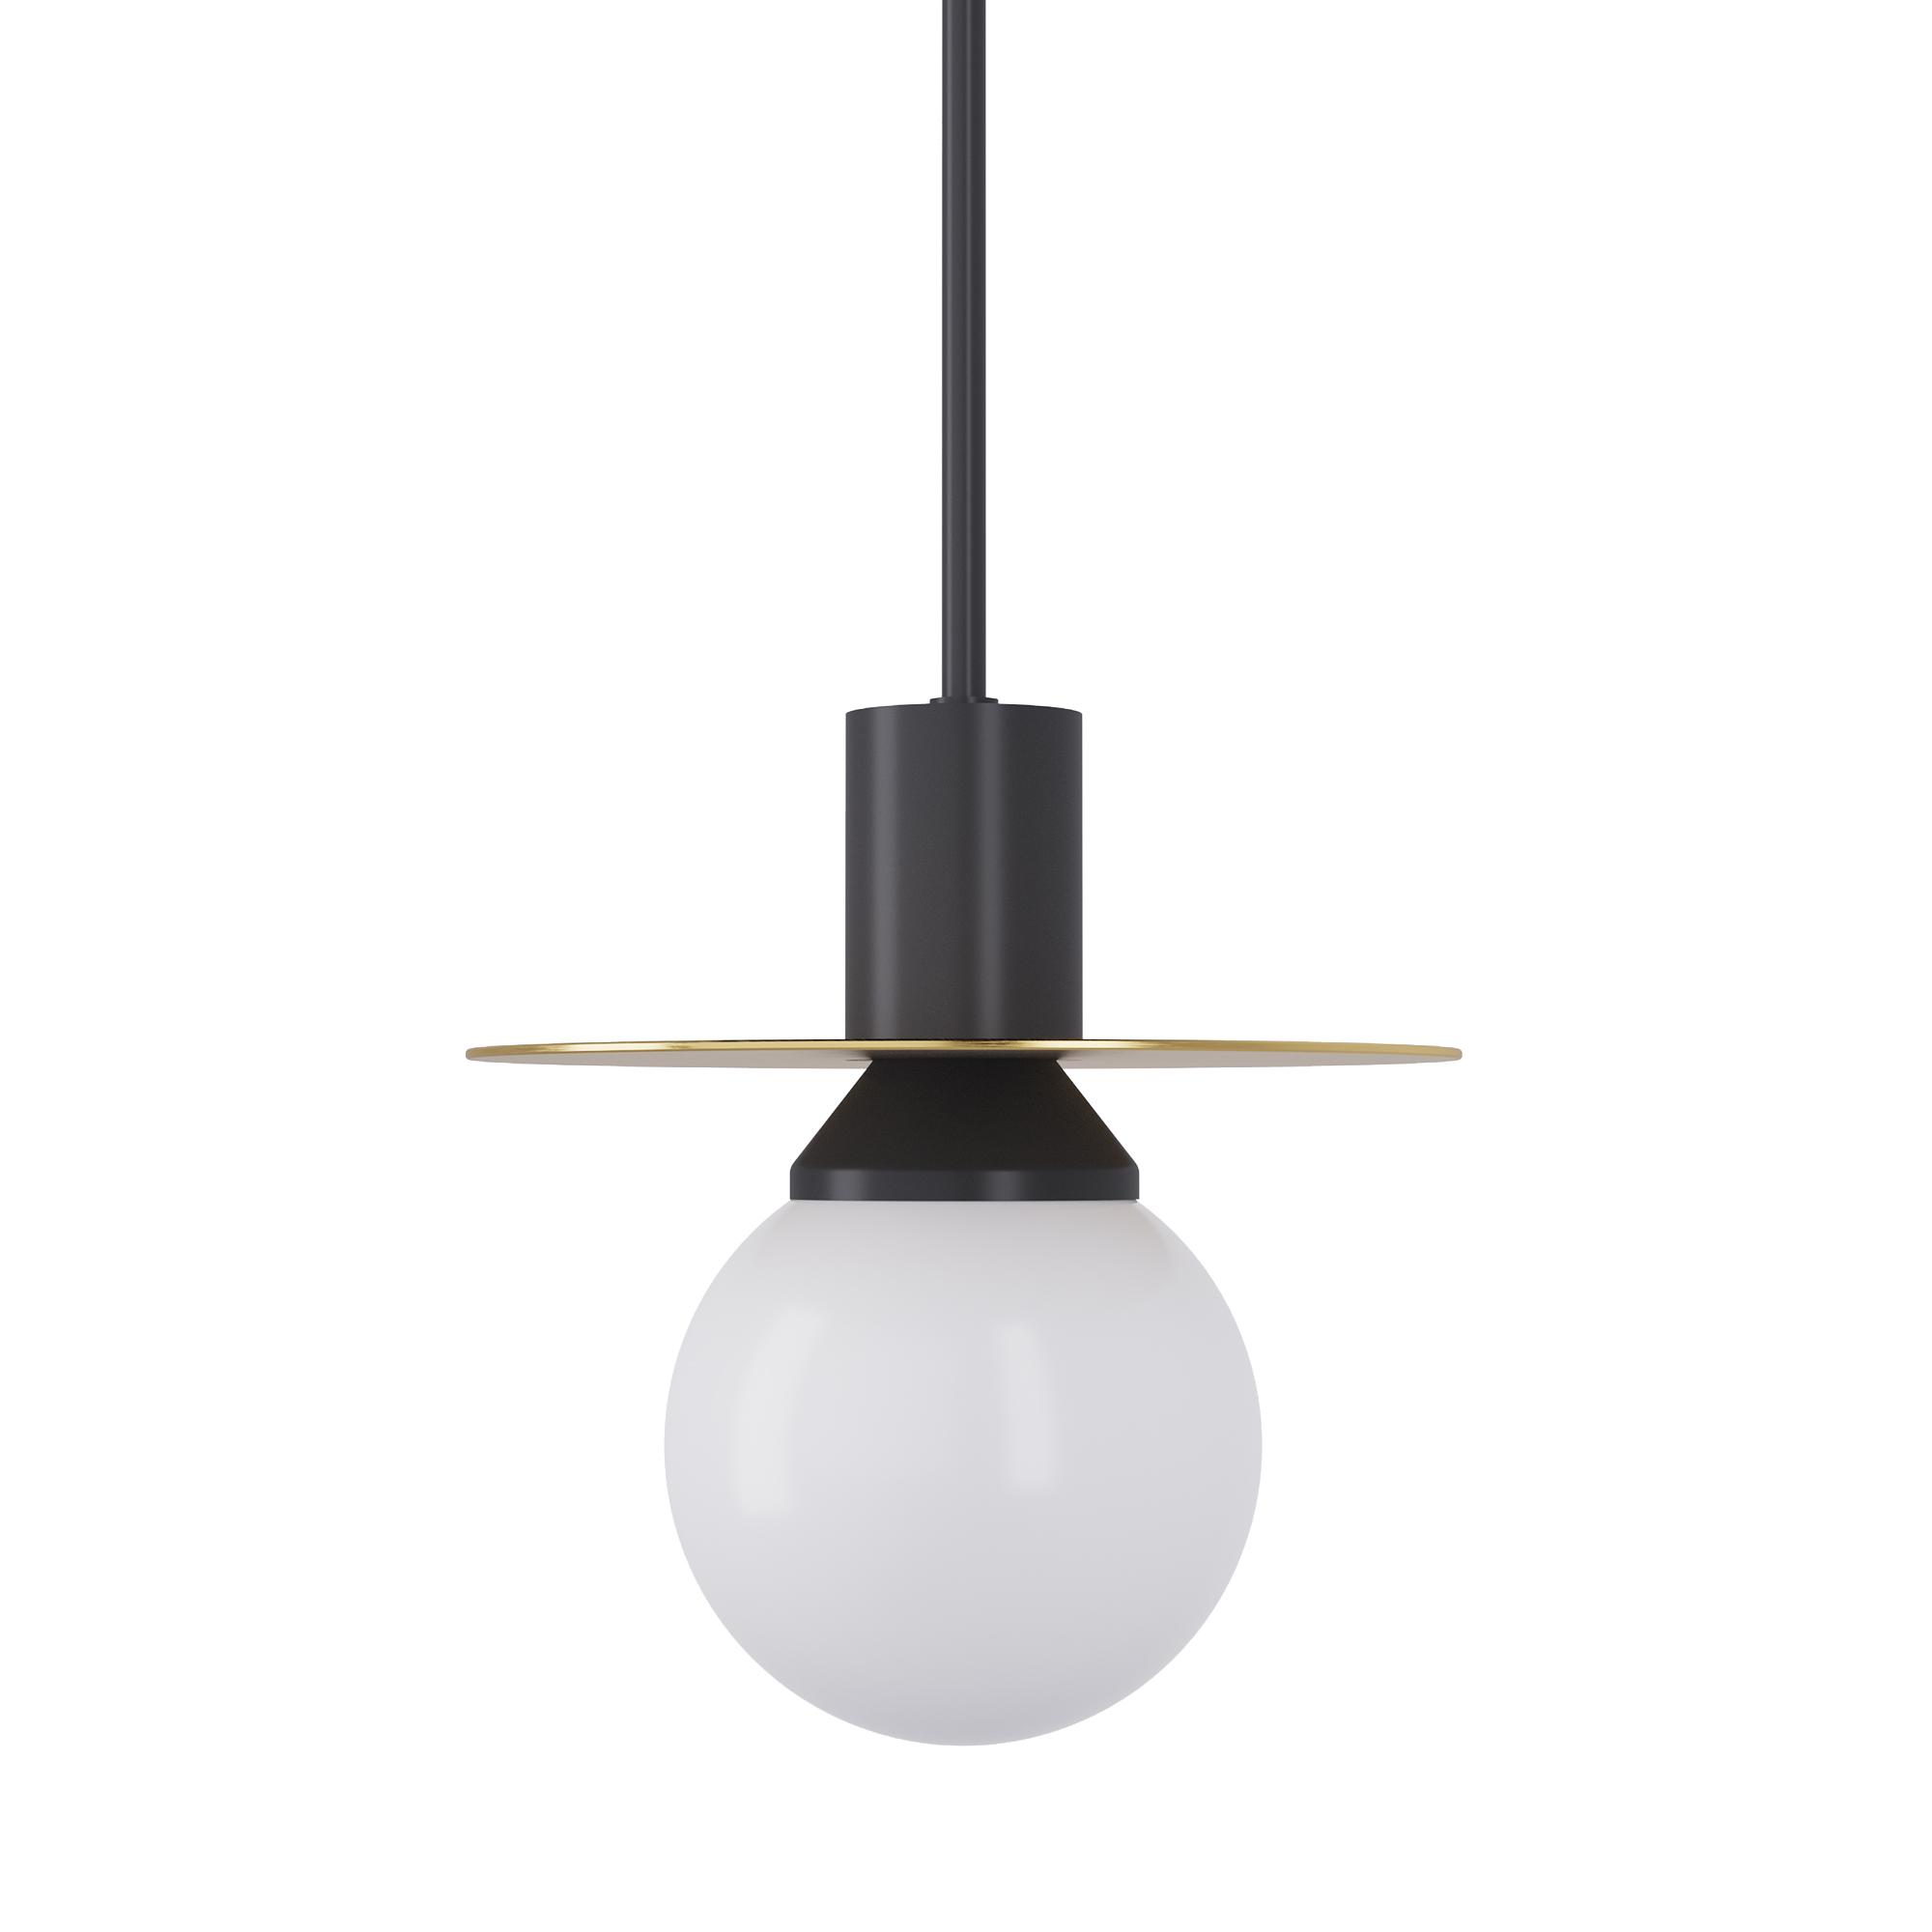 Bono lamp, SKU. 23698 by Pikartlights 3d model